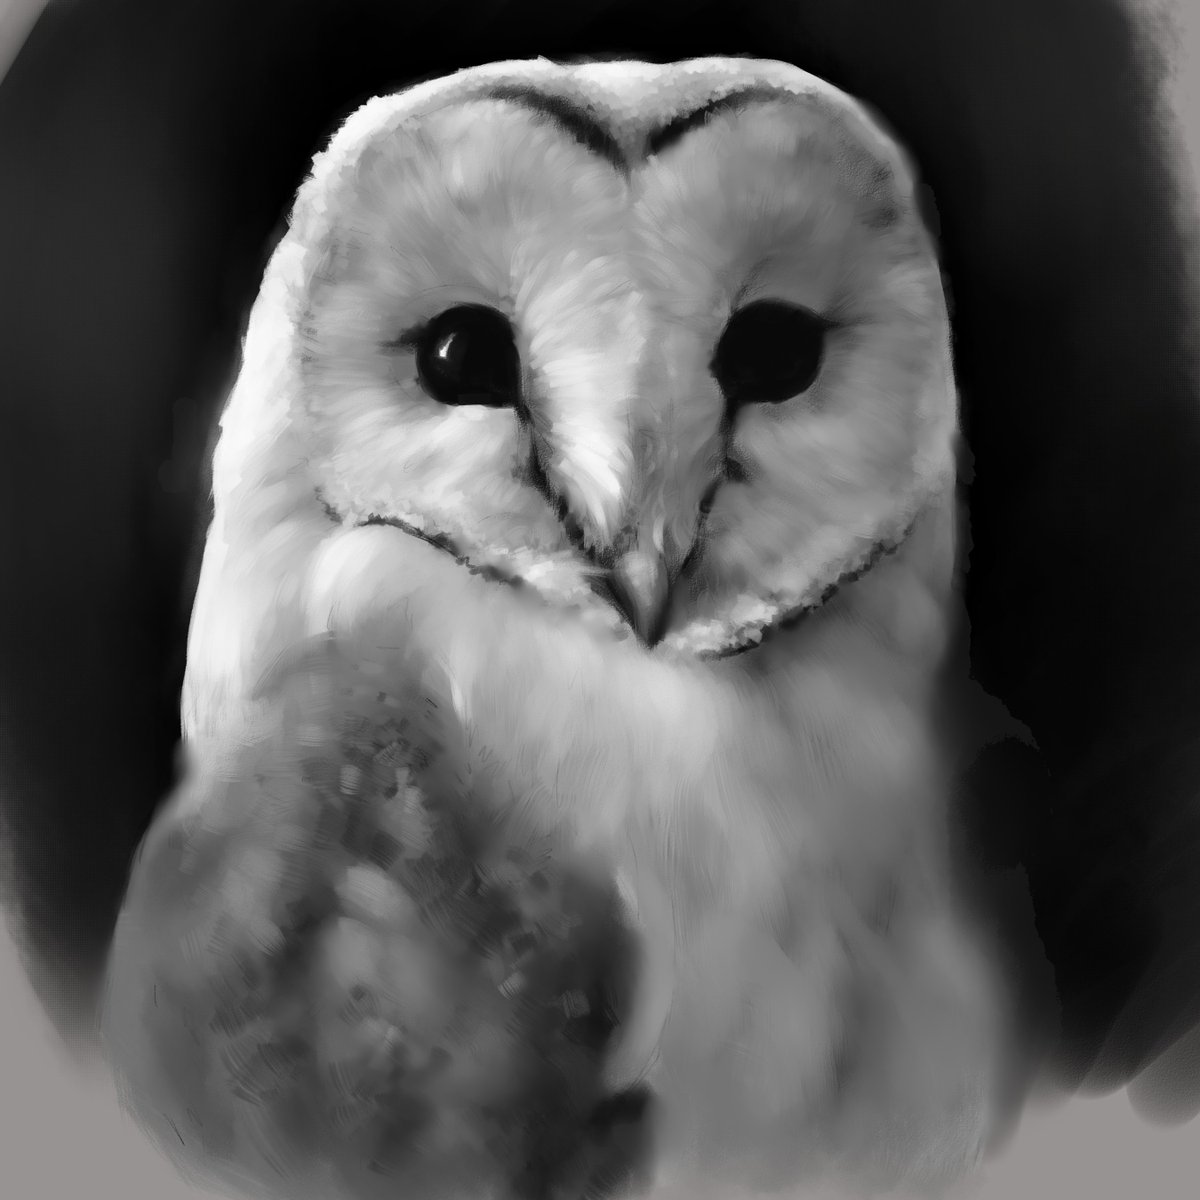 Barn owl digital painting from a while ago :)
#barnowls #barnowlart